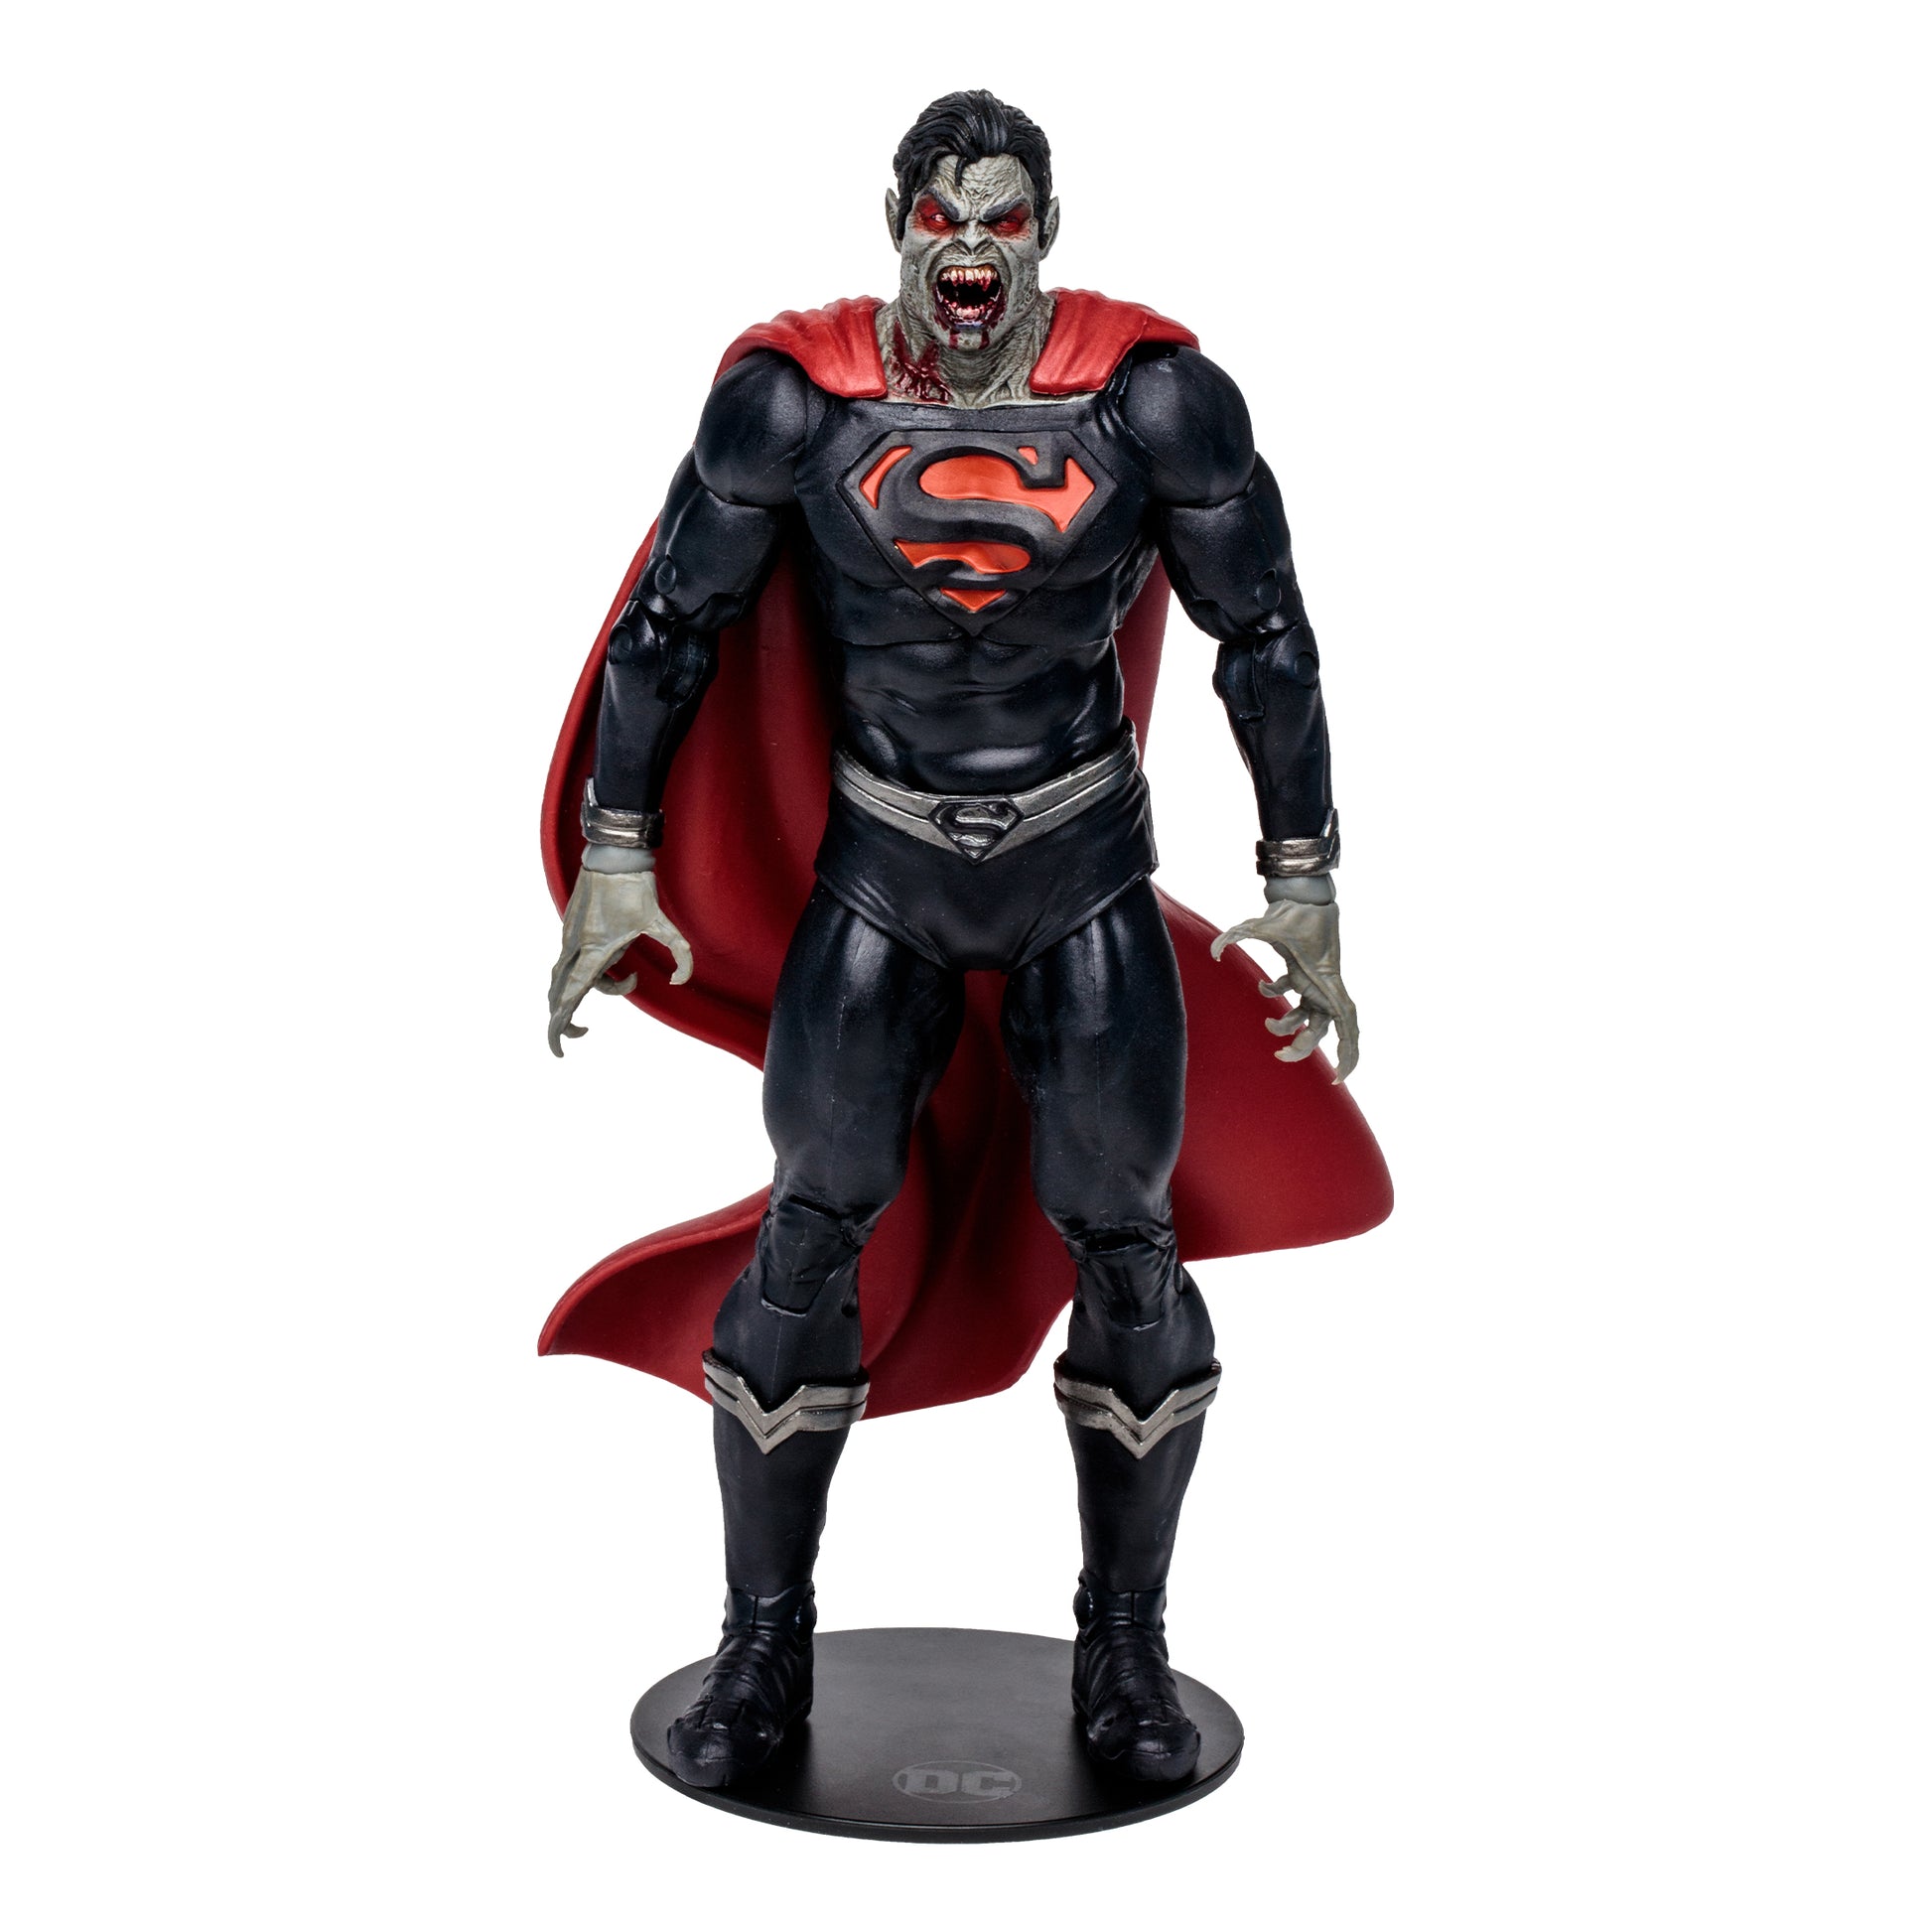 DC Multiverse Vampire Superman (DC vs.Vampires) Gold Label 7-Inch Action Figure front pose - Heretoserveyou